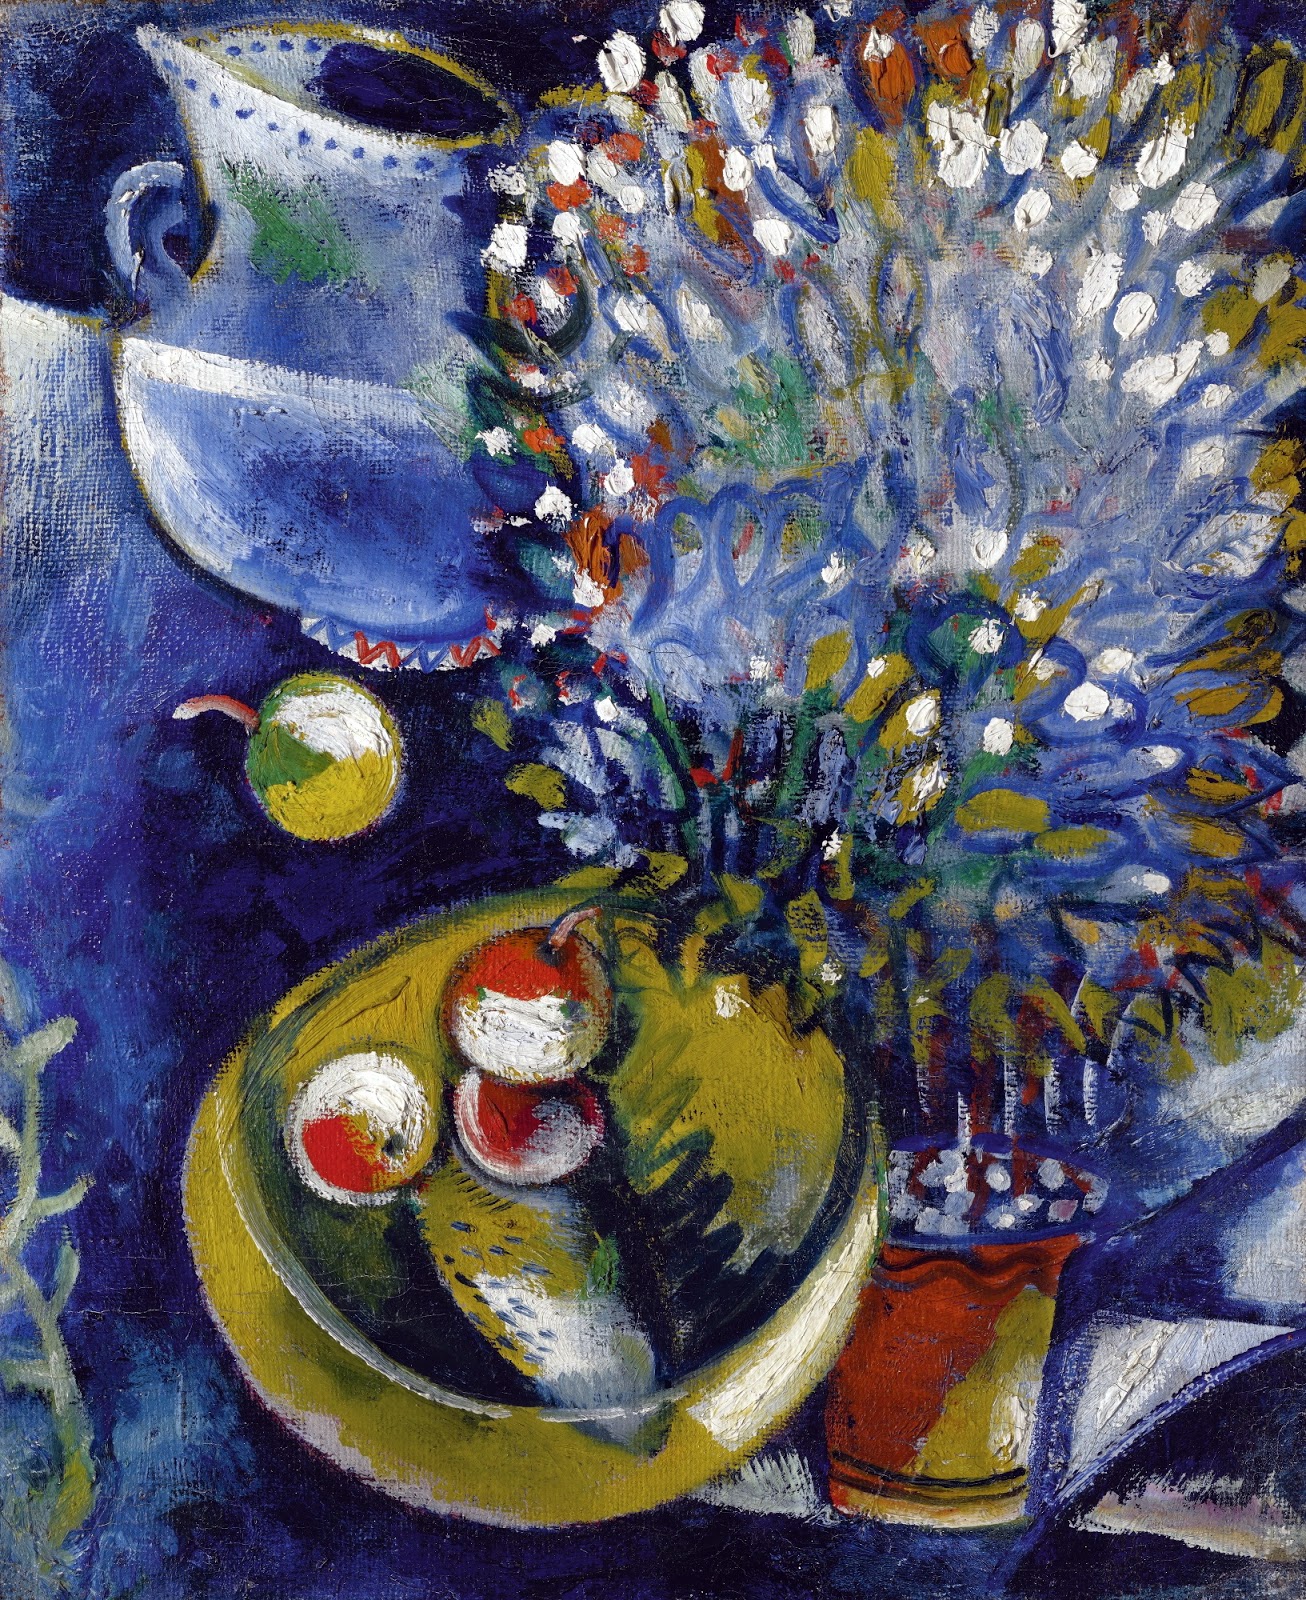 Marc+Chagall-1887-1985 (293).jpg